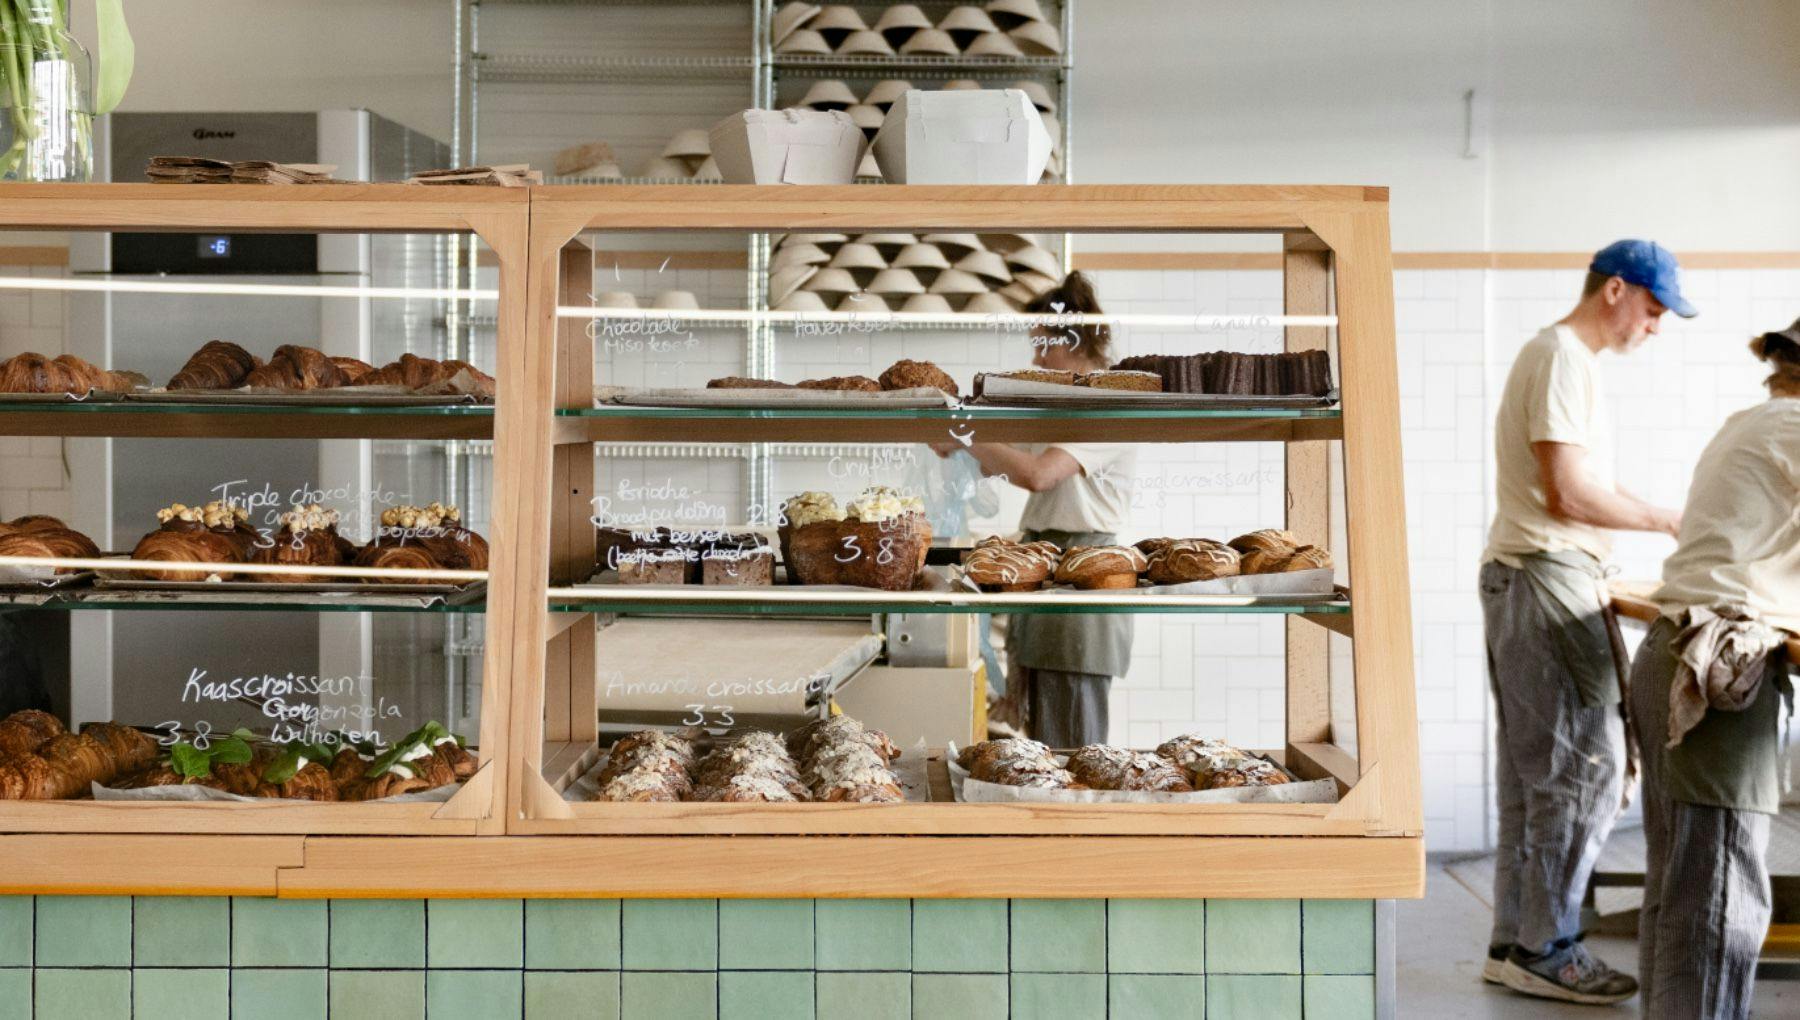 Fort Negen bakery